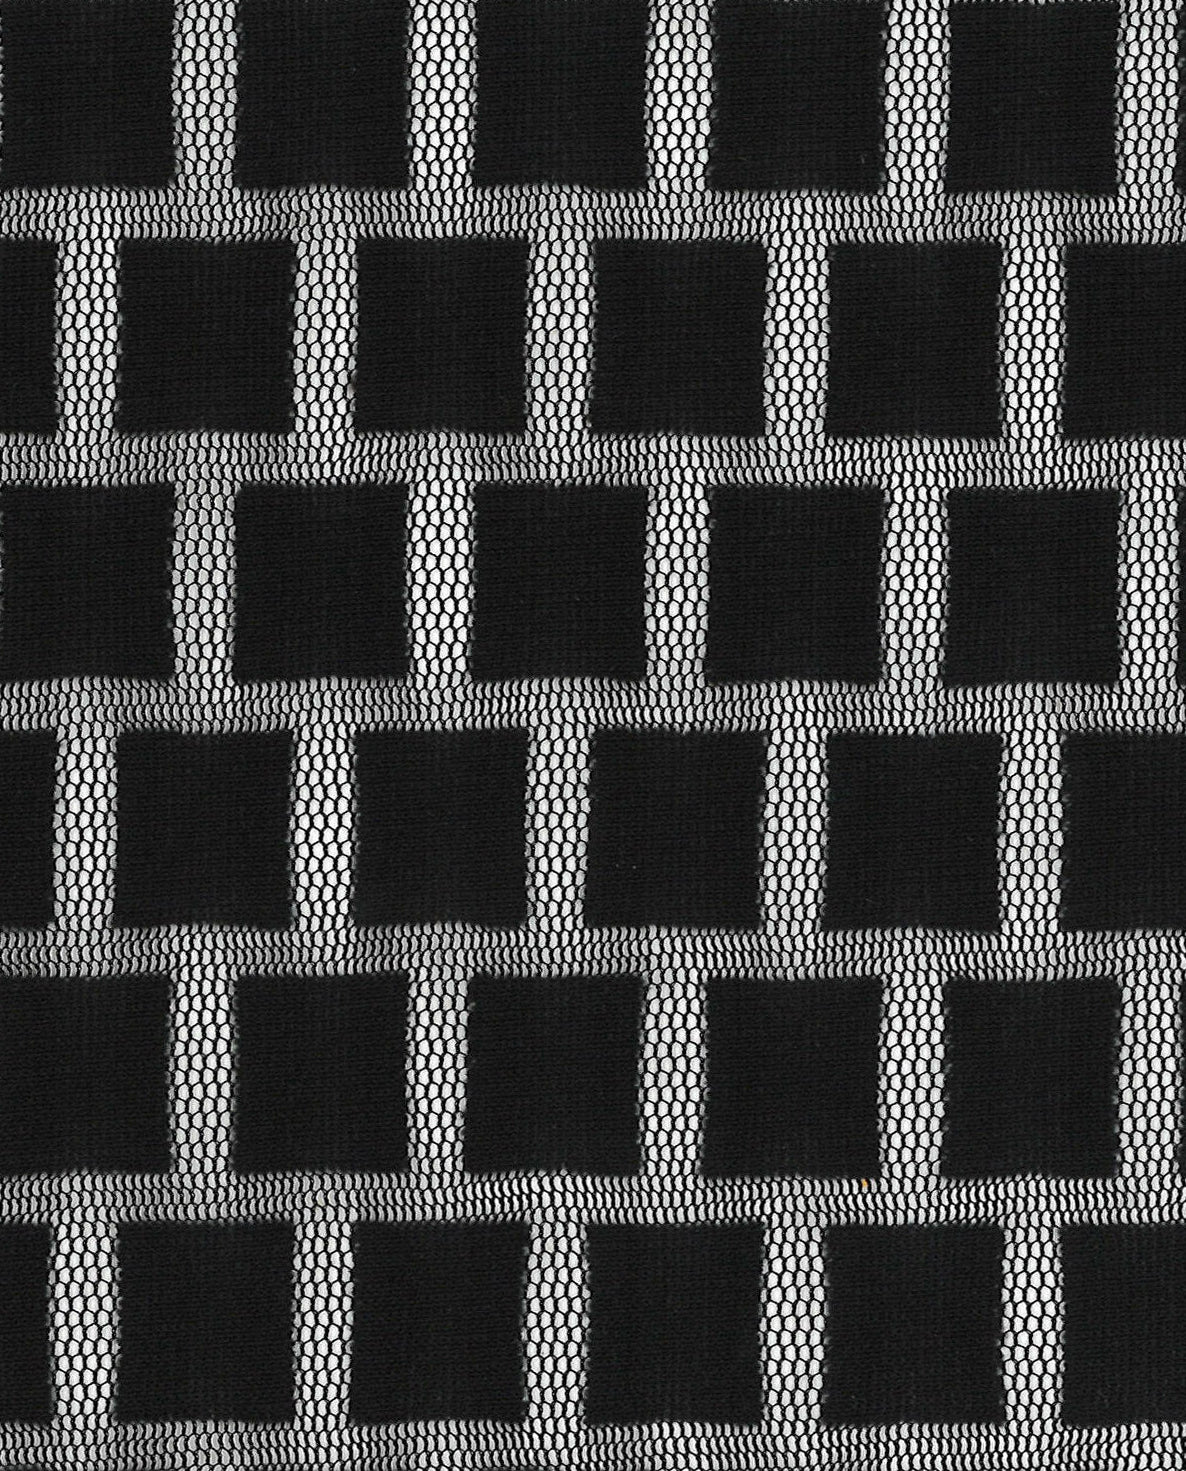 14029-05 Black Knit Mesh Square Pattern Burn-Out Plain Dyed Blend black blend burn-out knit mesh nylon plain dyed polyester Burn-Out, Mesh - knit fabric - woven fabric - fabric company - fabric wholesale - fabric b2b - fabric factory - high quality fabric - hong kong fabric - fabric hk - acetate fabric - cotton fabric - linen fabric - metallic fabric - nylon fabric - polyester fabric - spandex fabric - chun wing hing - cwh hk - fabric worldwide ship - 針織布 - 梳織布 - 布料公司- 布料批發 - 香港布料 - 秦榮興